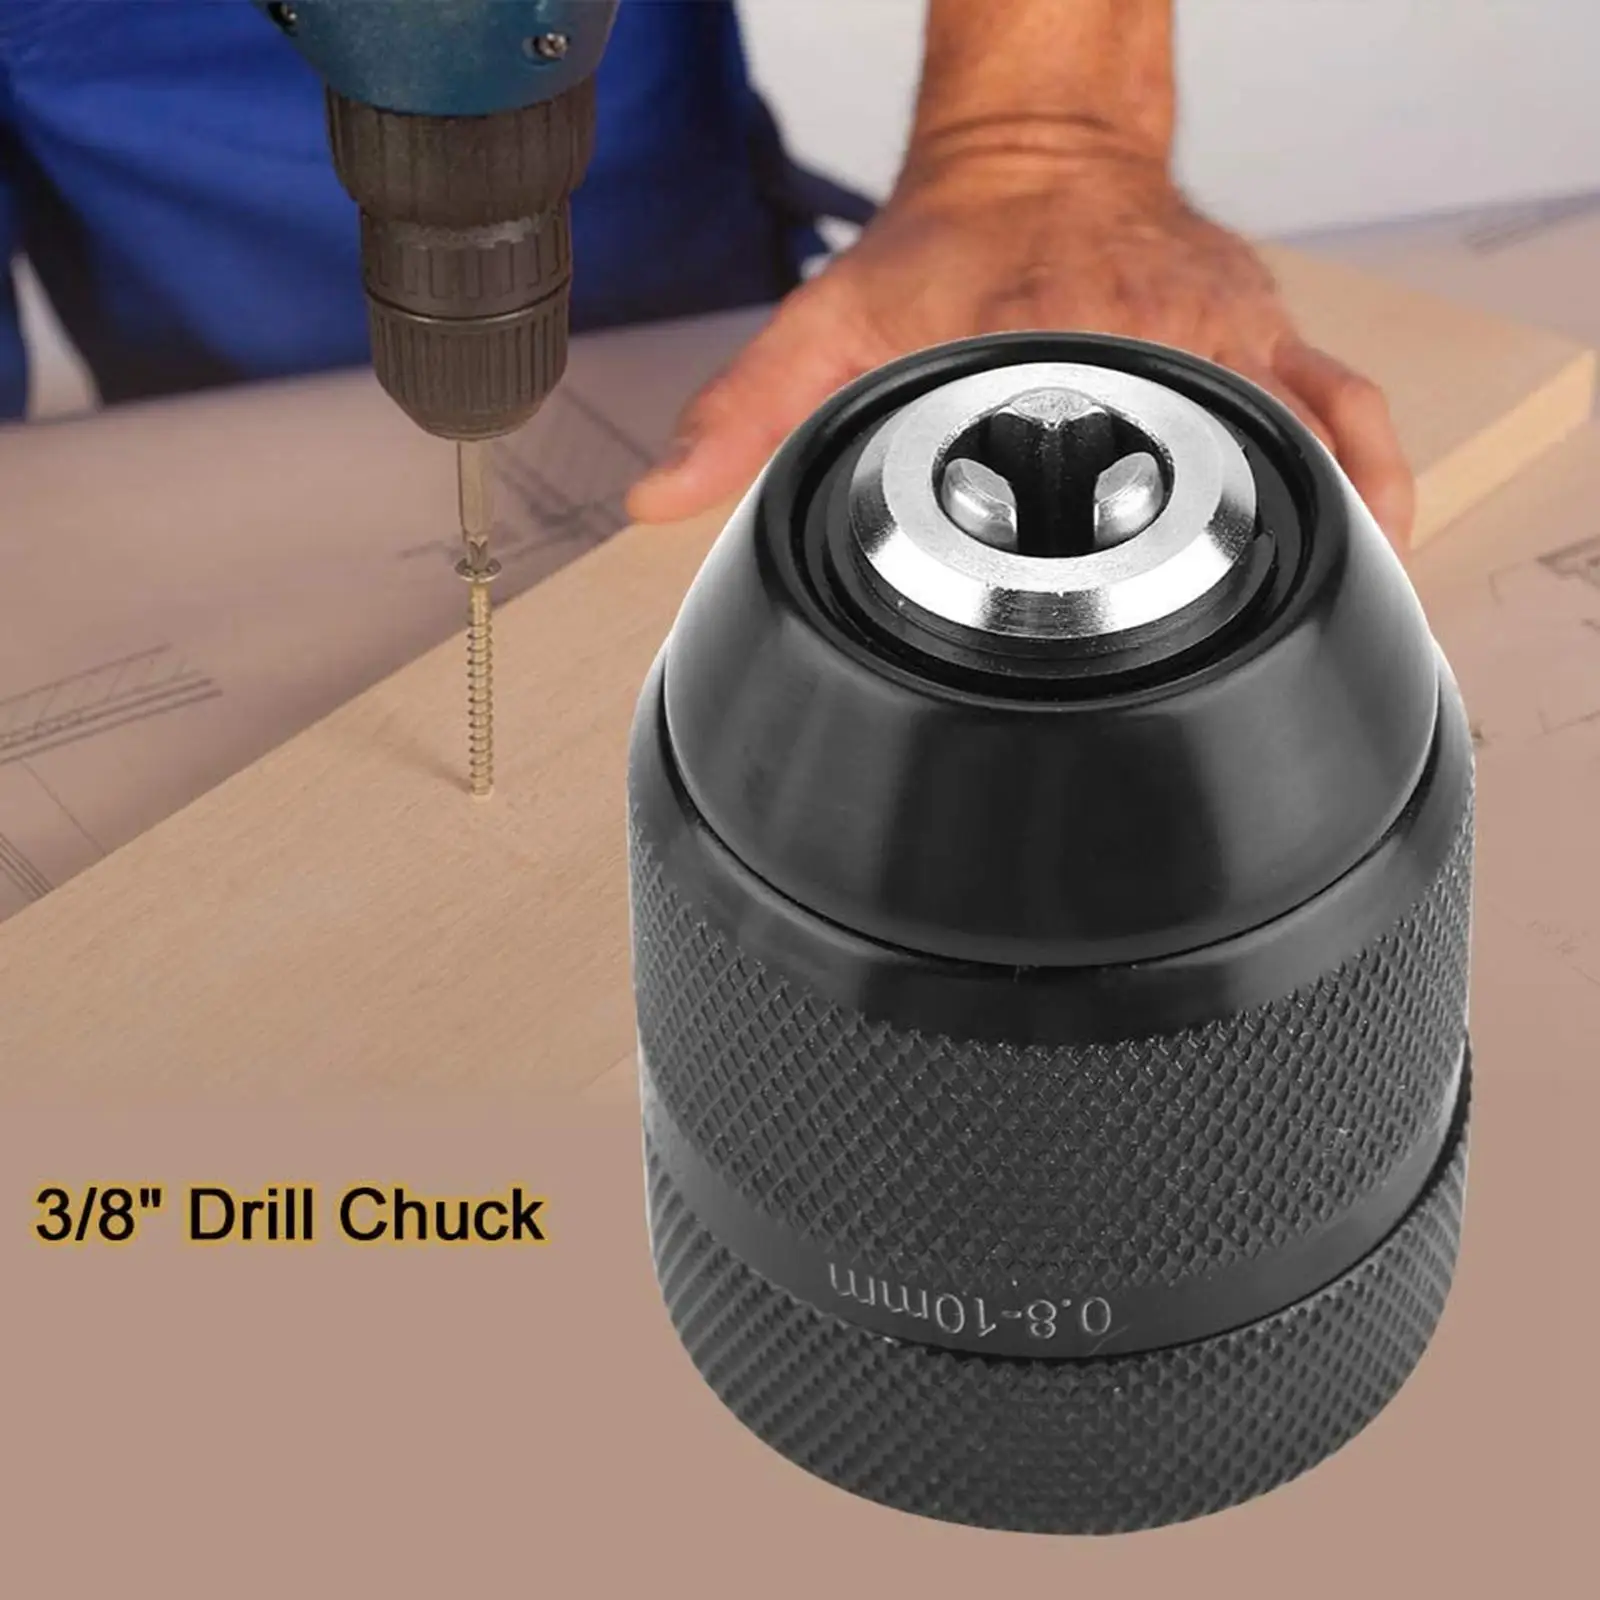 keyles Drill Chuck Converter 3/8-24 Steel Material for Home Improvement